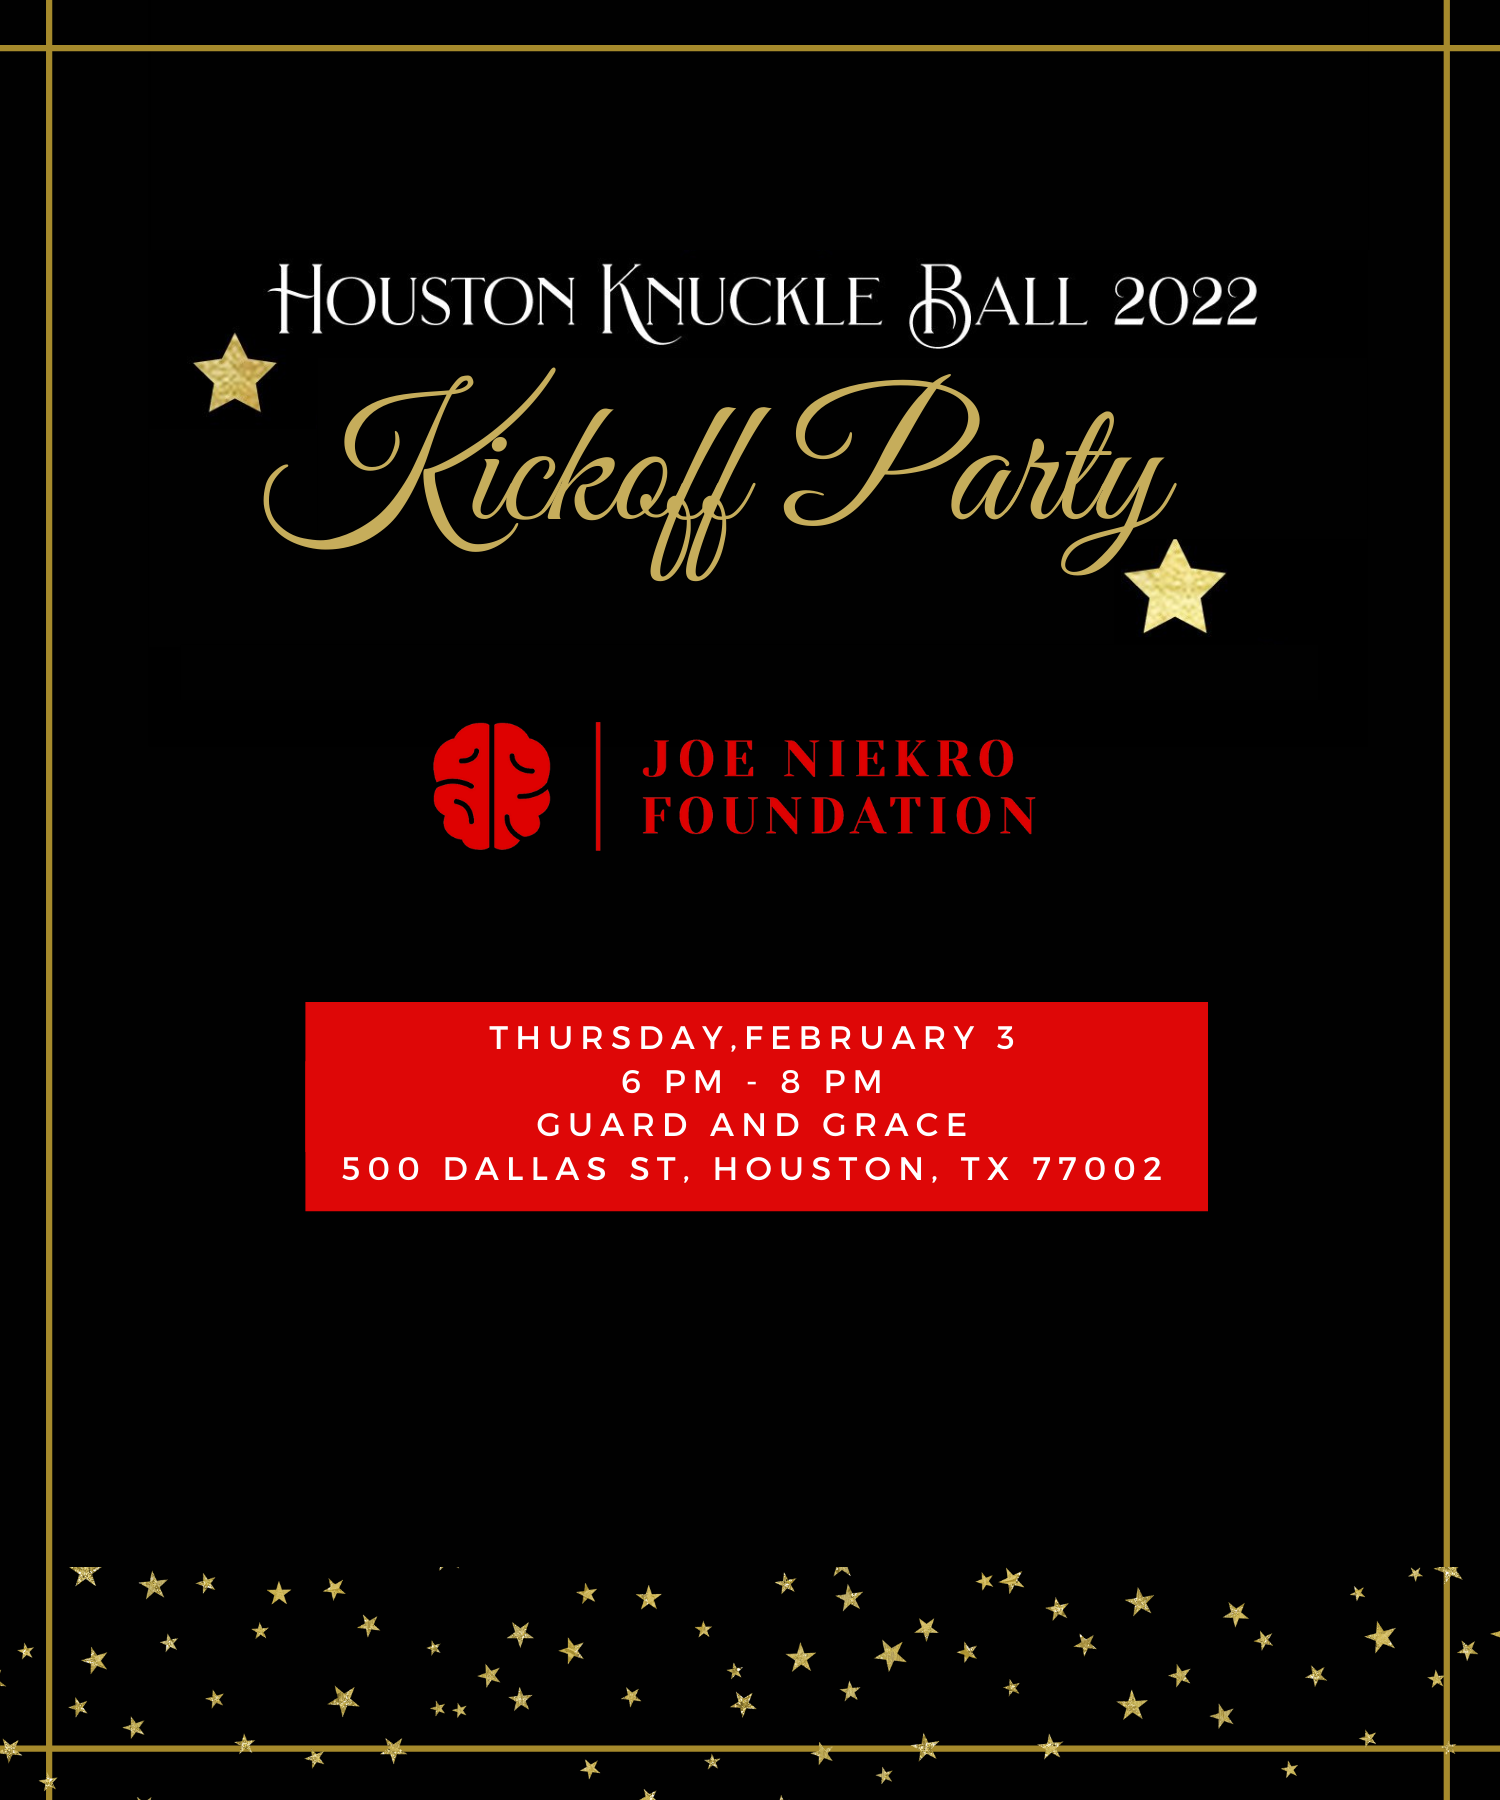 https://www.joeniekrofoundation.com/knuckle-ball-kickoff-party-2022/attachment/black-and-red-illustrated-flower-gala-invitation-invitation-portrait-5-x-6-in-3/